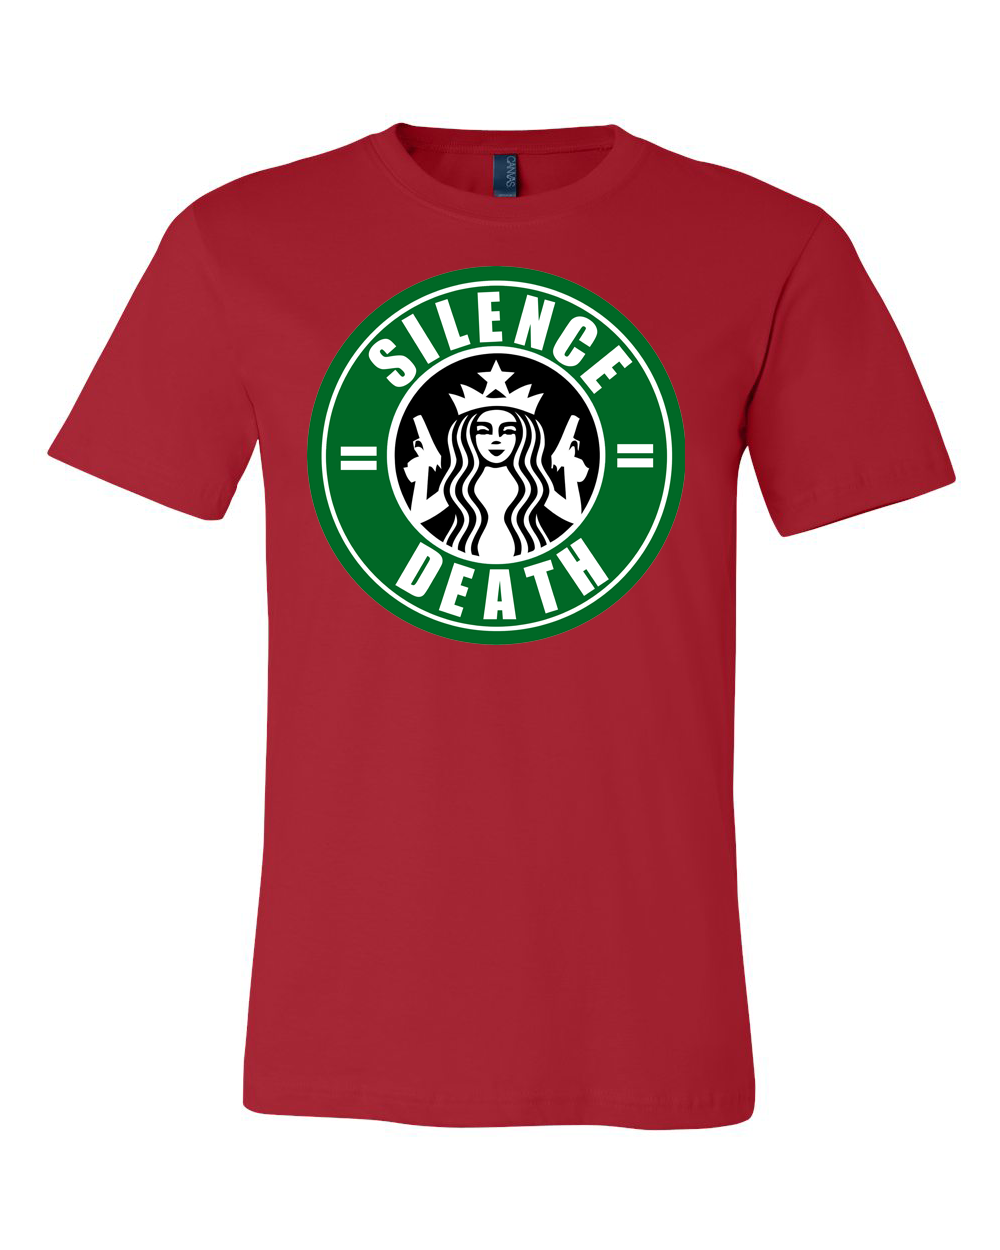 Silence Equals Death : Starbucks Tee